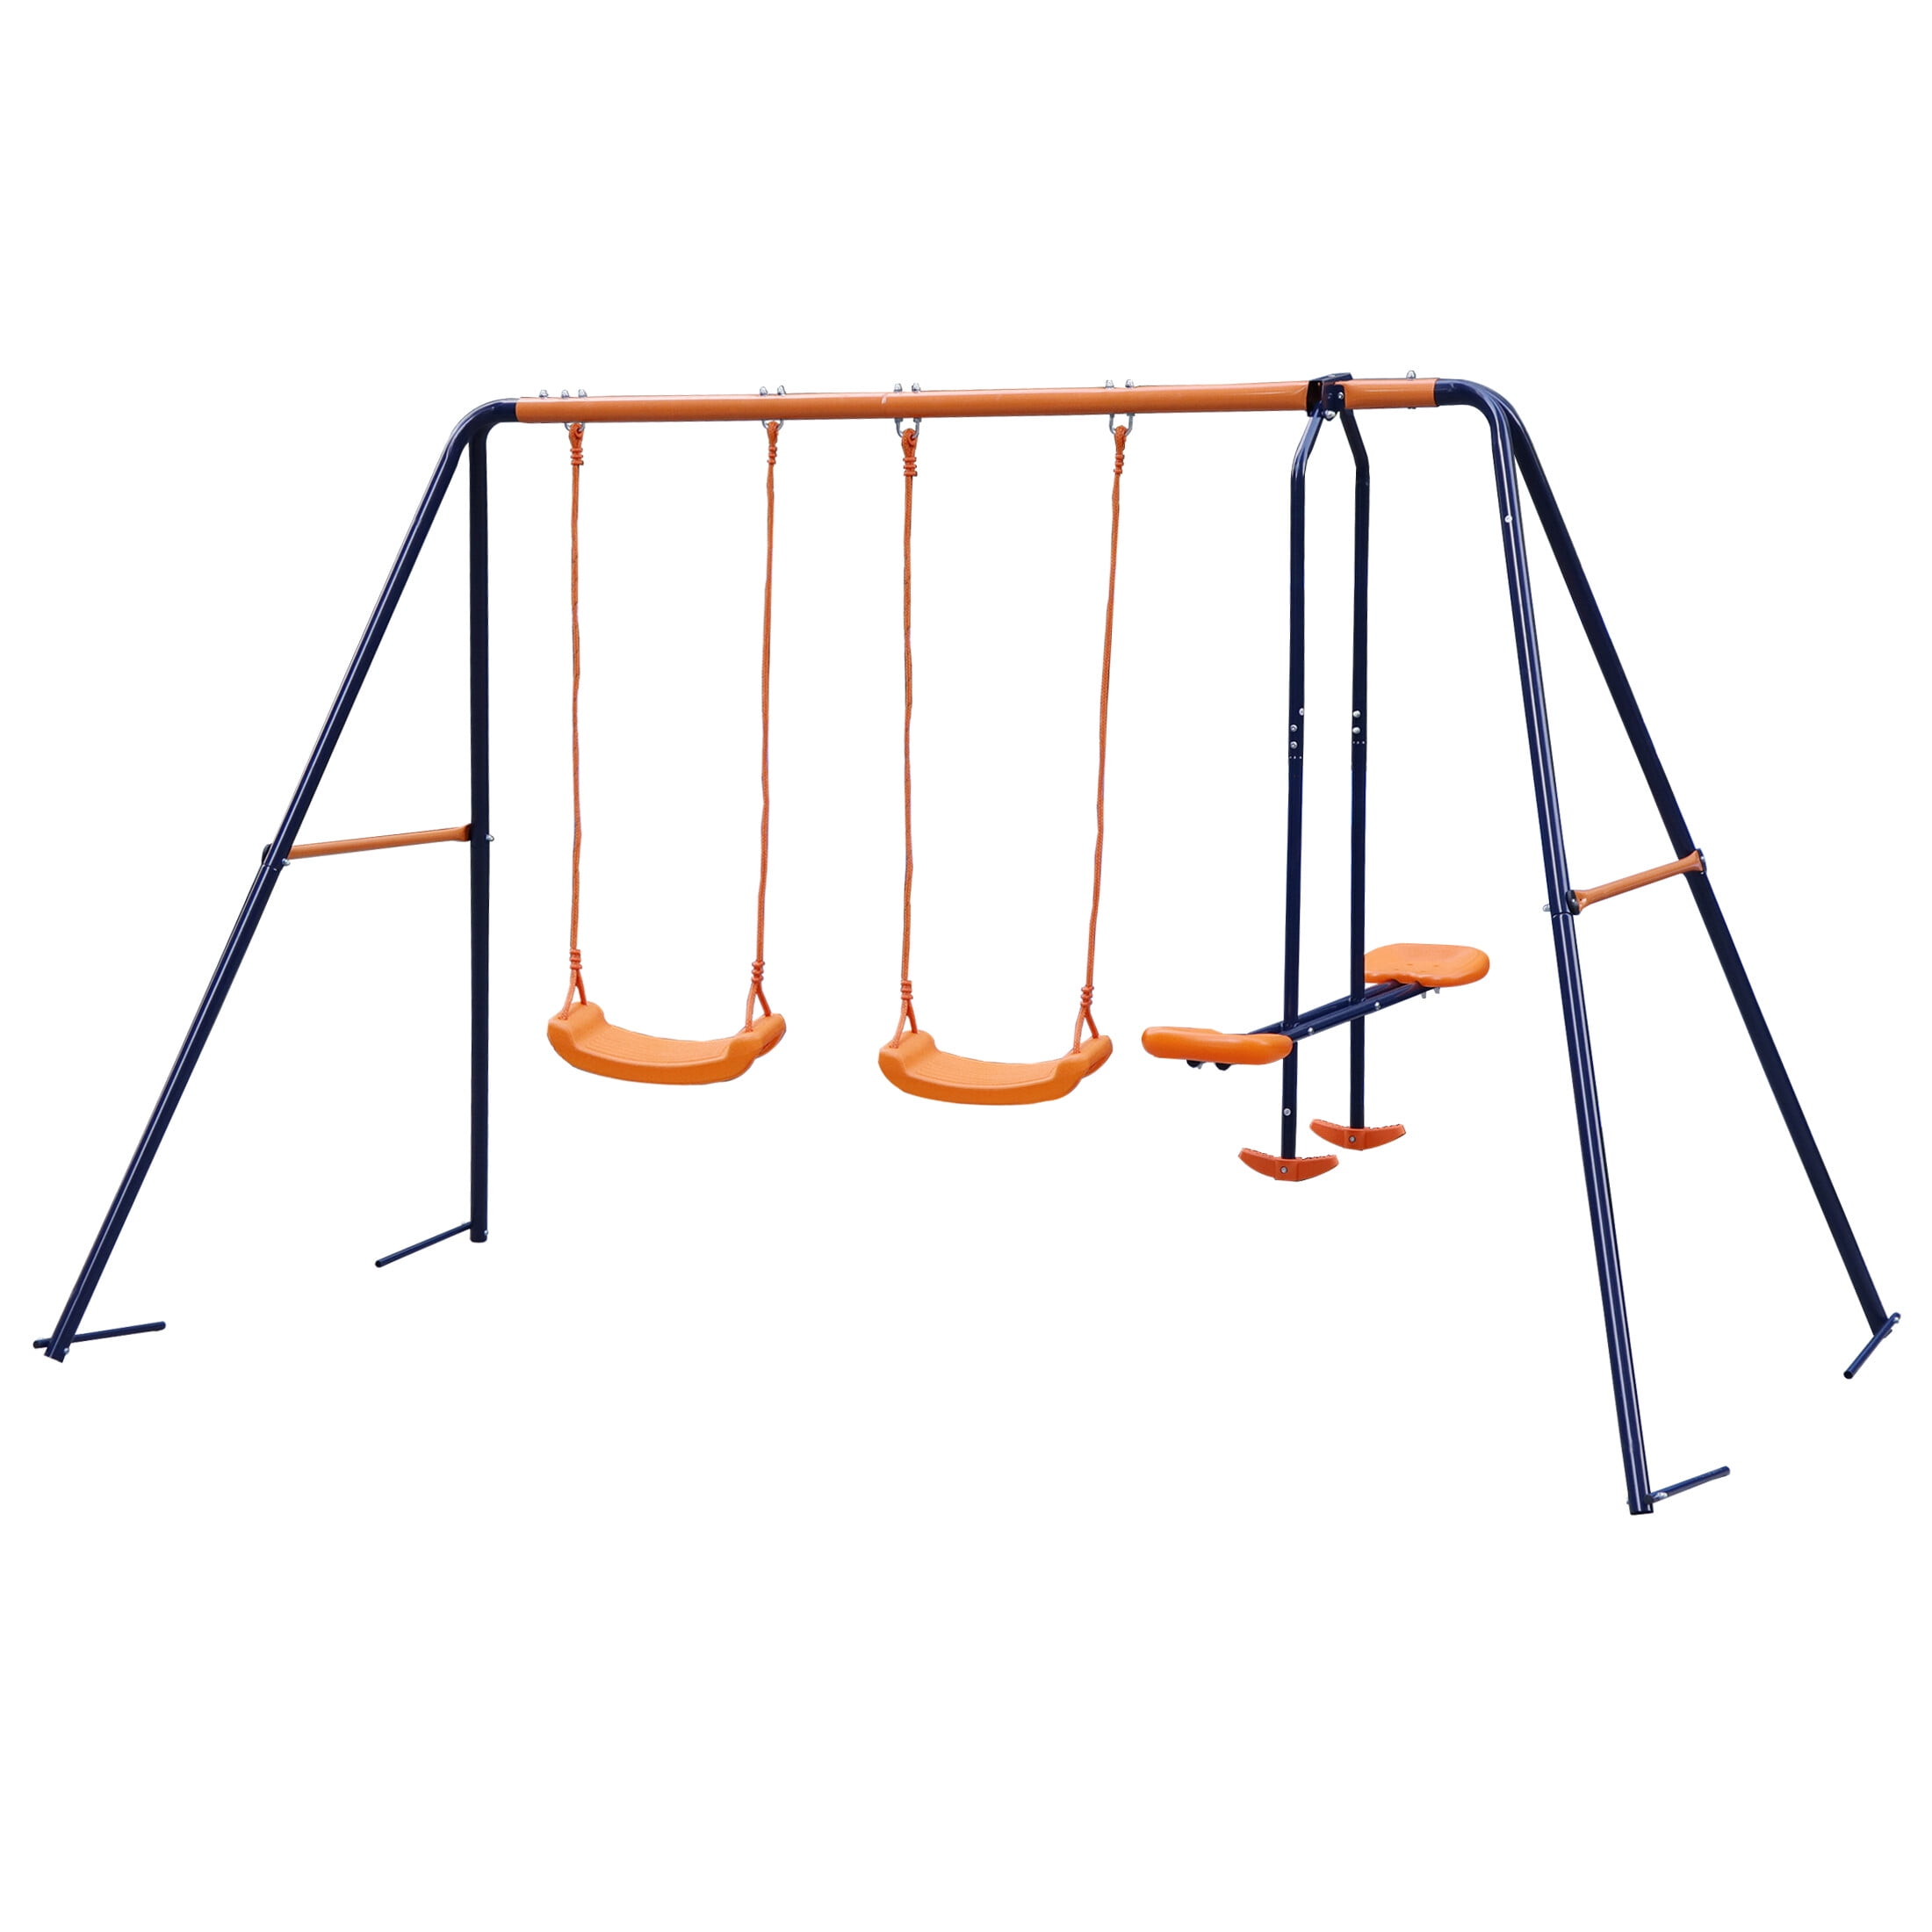 Metal A-Frame Swing Set Fun Play Chair Kids Children Backyard Home Frame Stand 